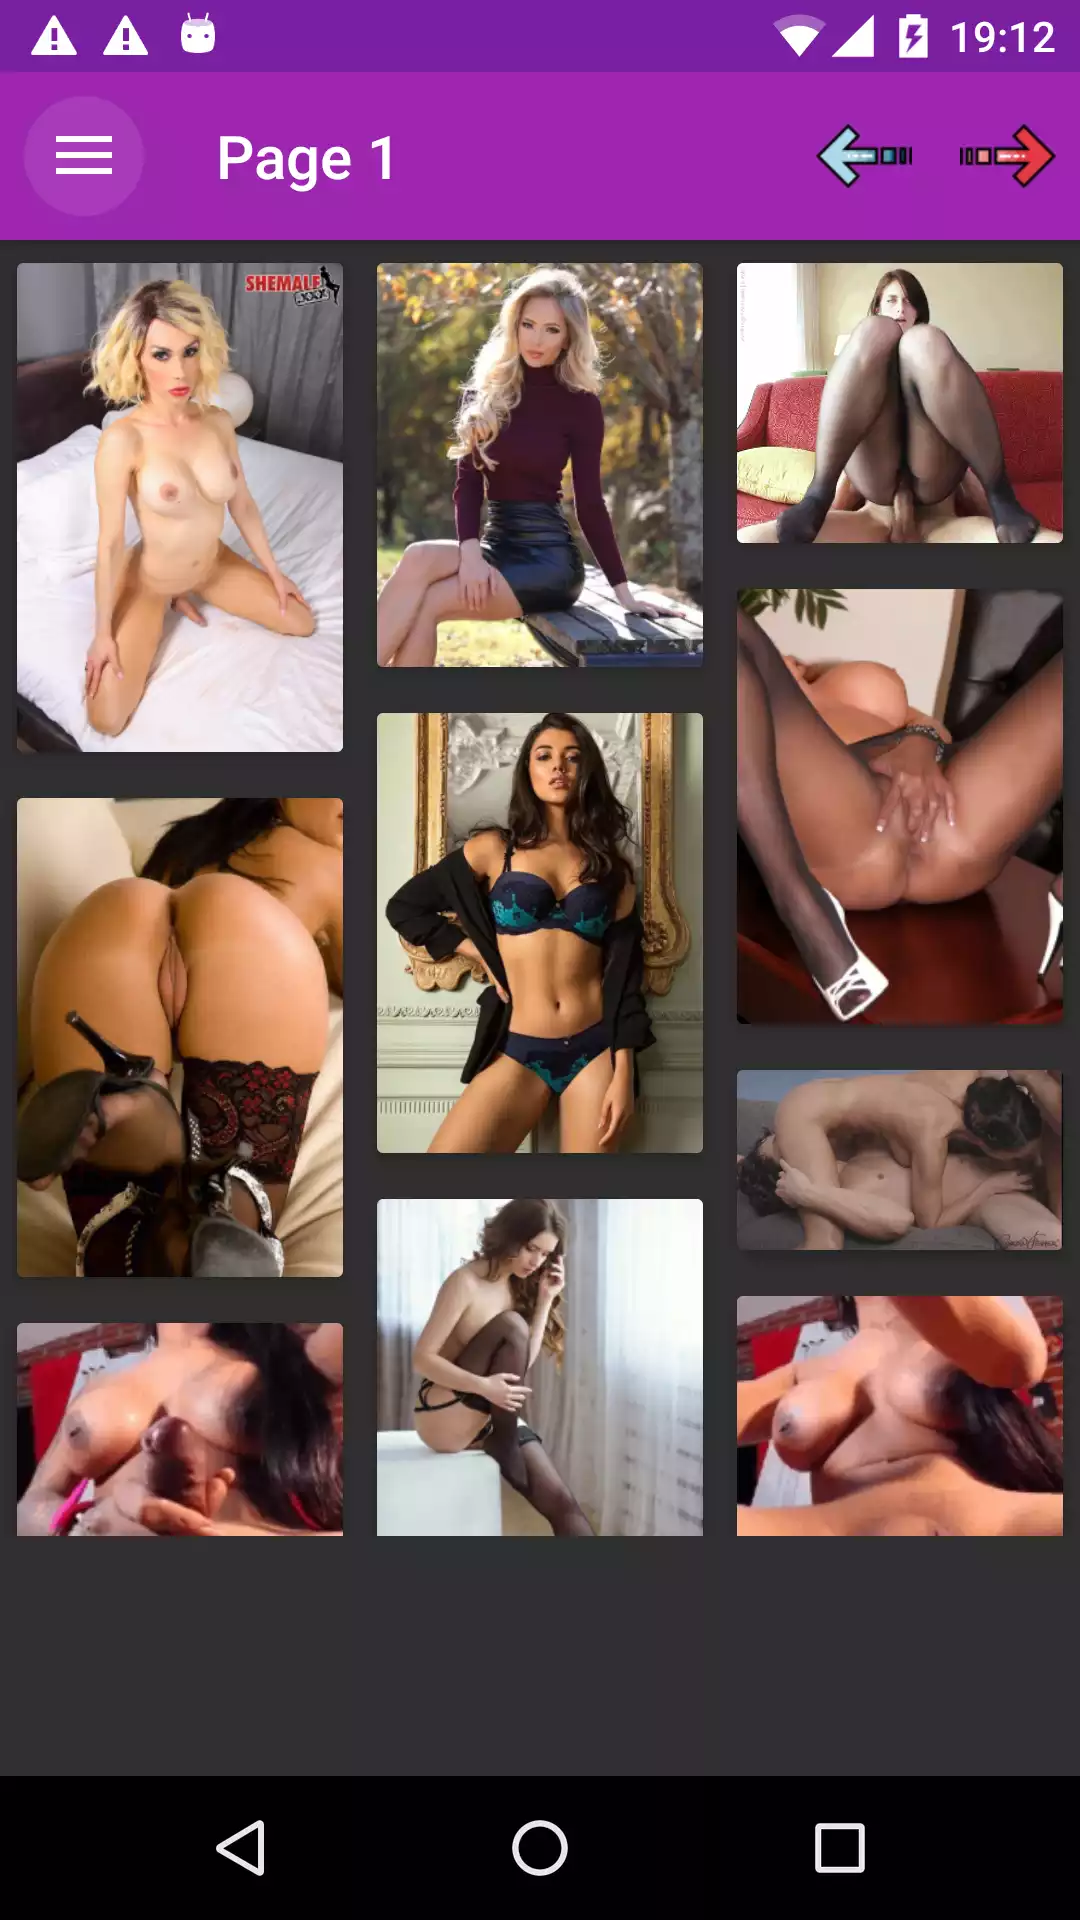 Sexy Group Sex Pics pornstar,mature,pictures,download,apk,manga,hentai,photos,gallery,henti,porn,lisa,aplikasi,pics,android,browser,app,sexy,adult